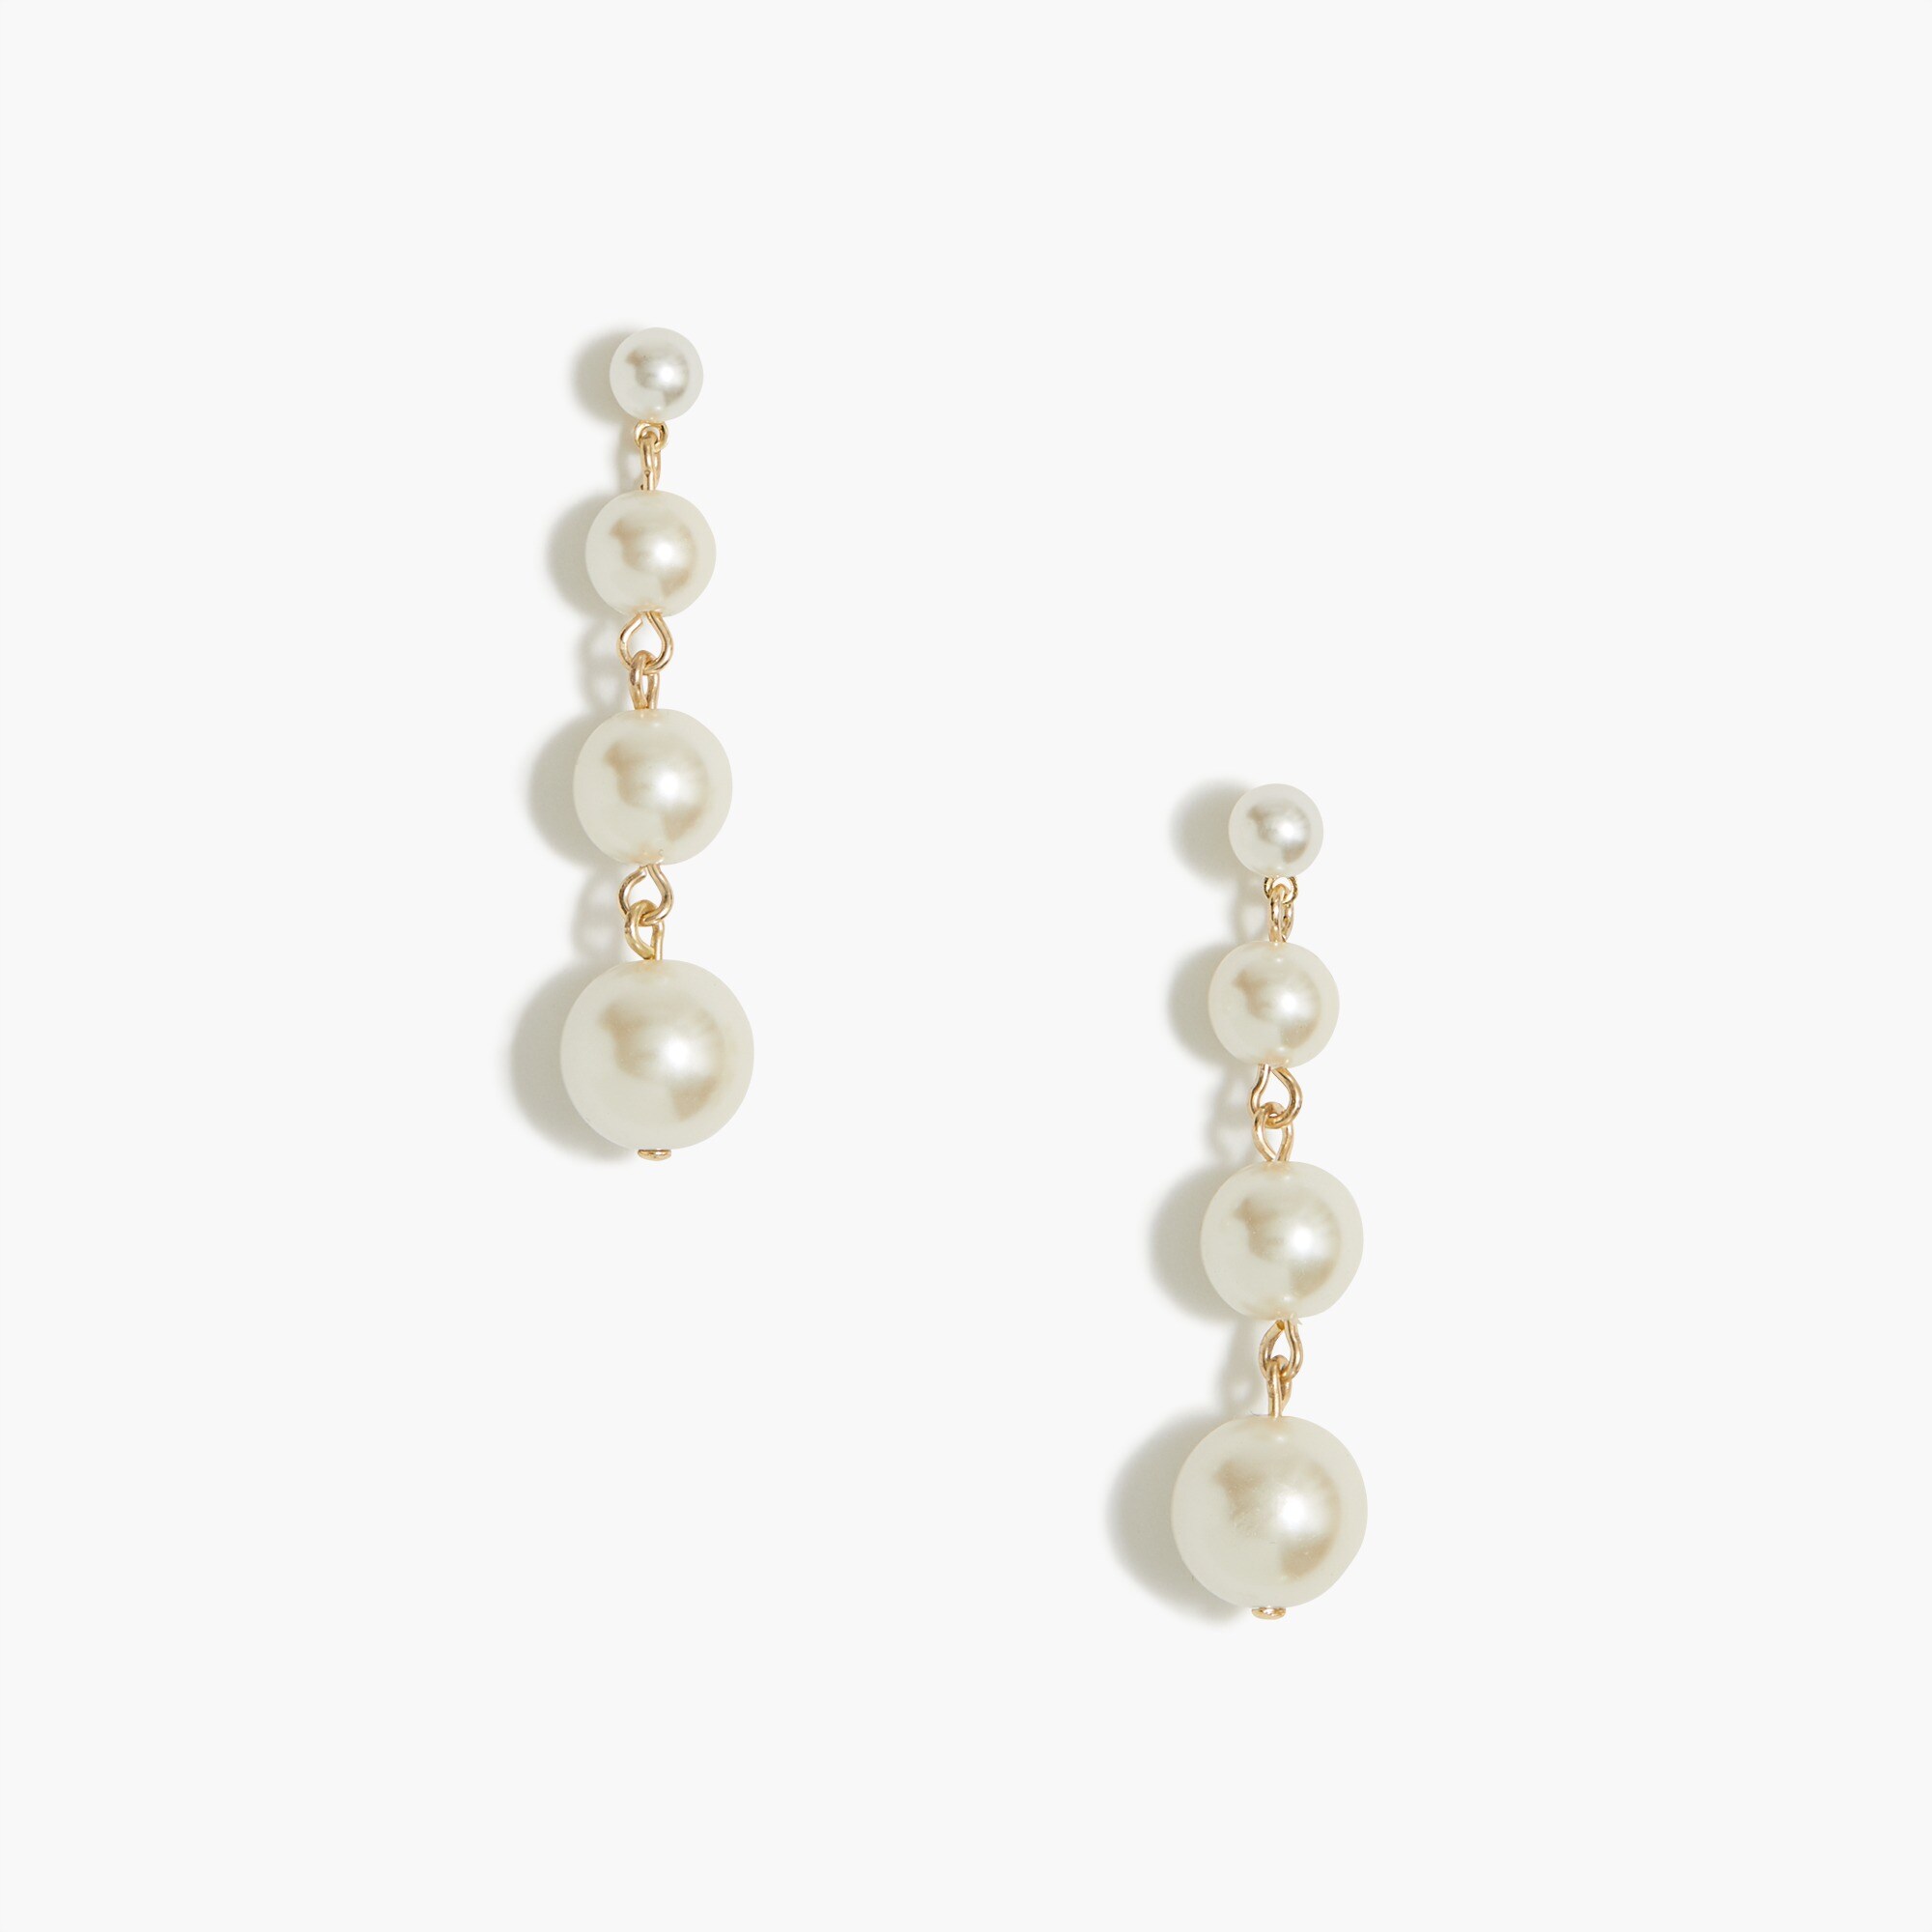  Pearl drop earrings